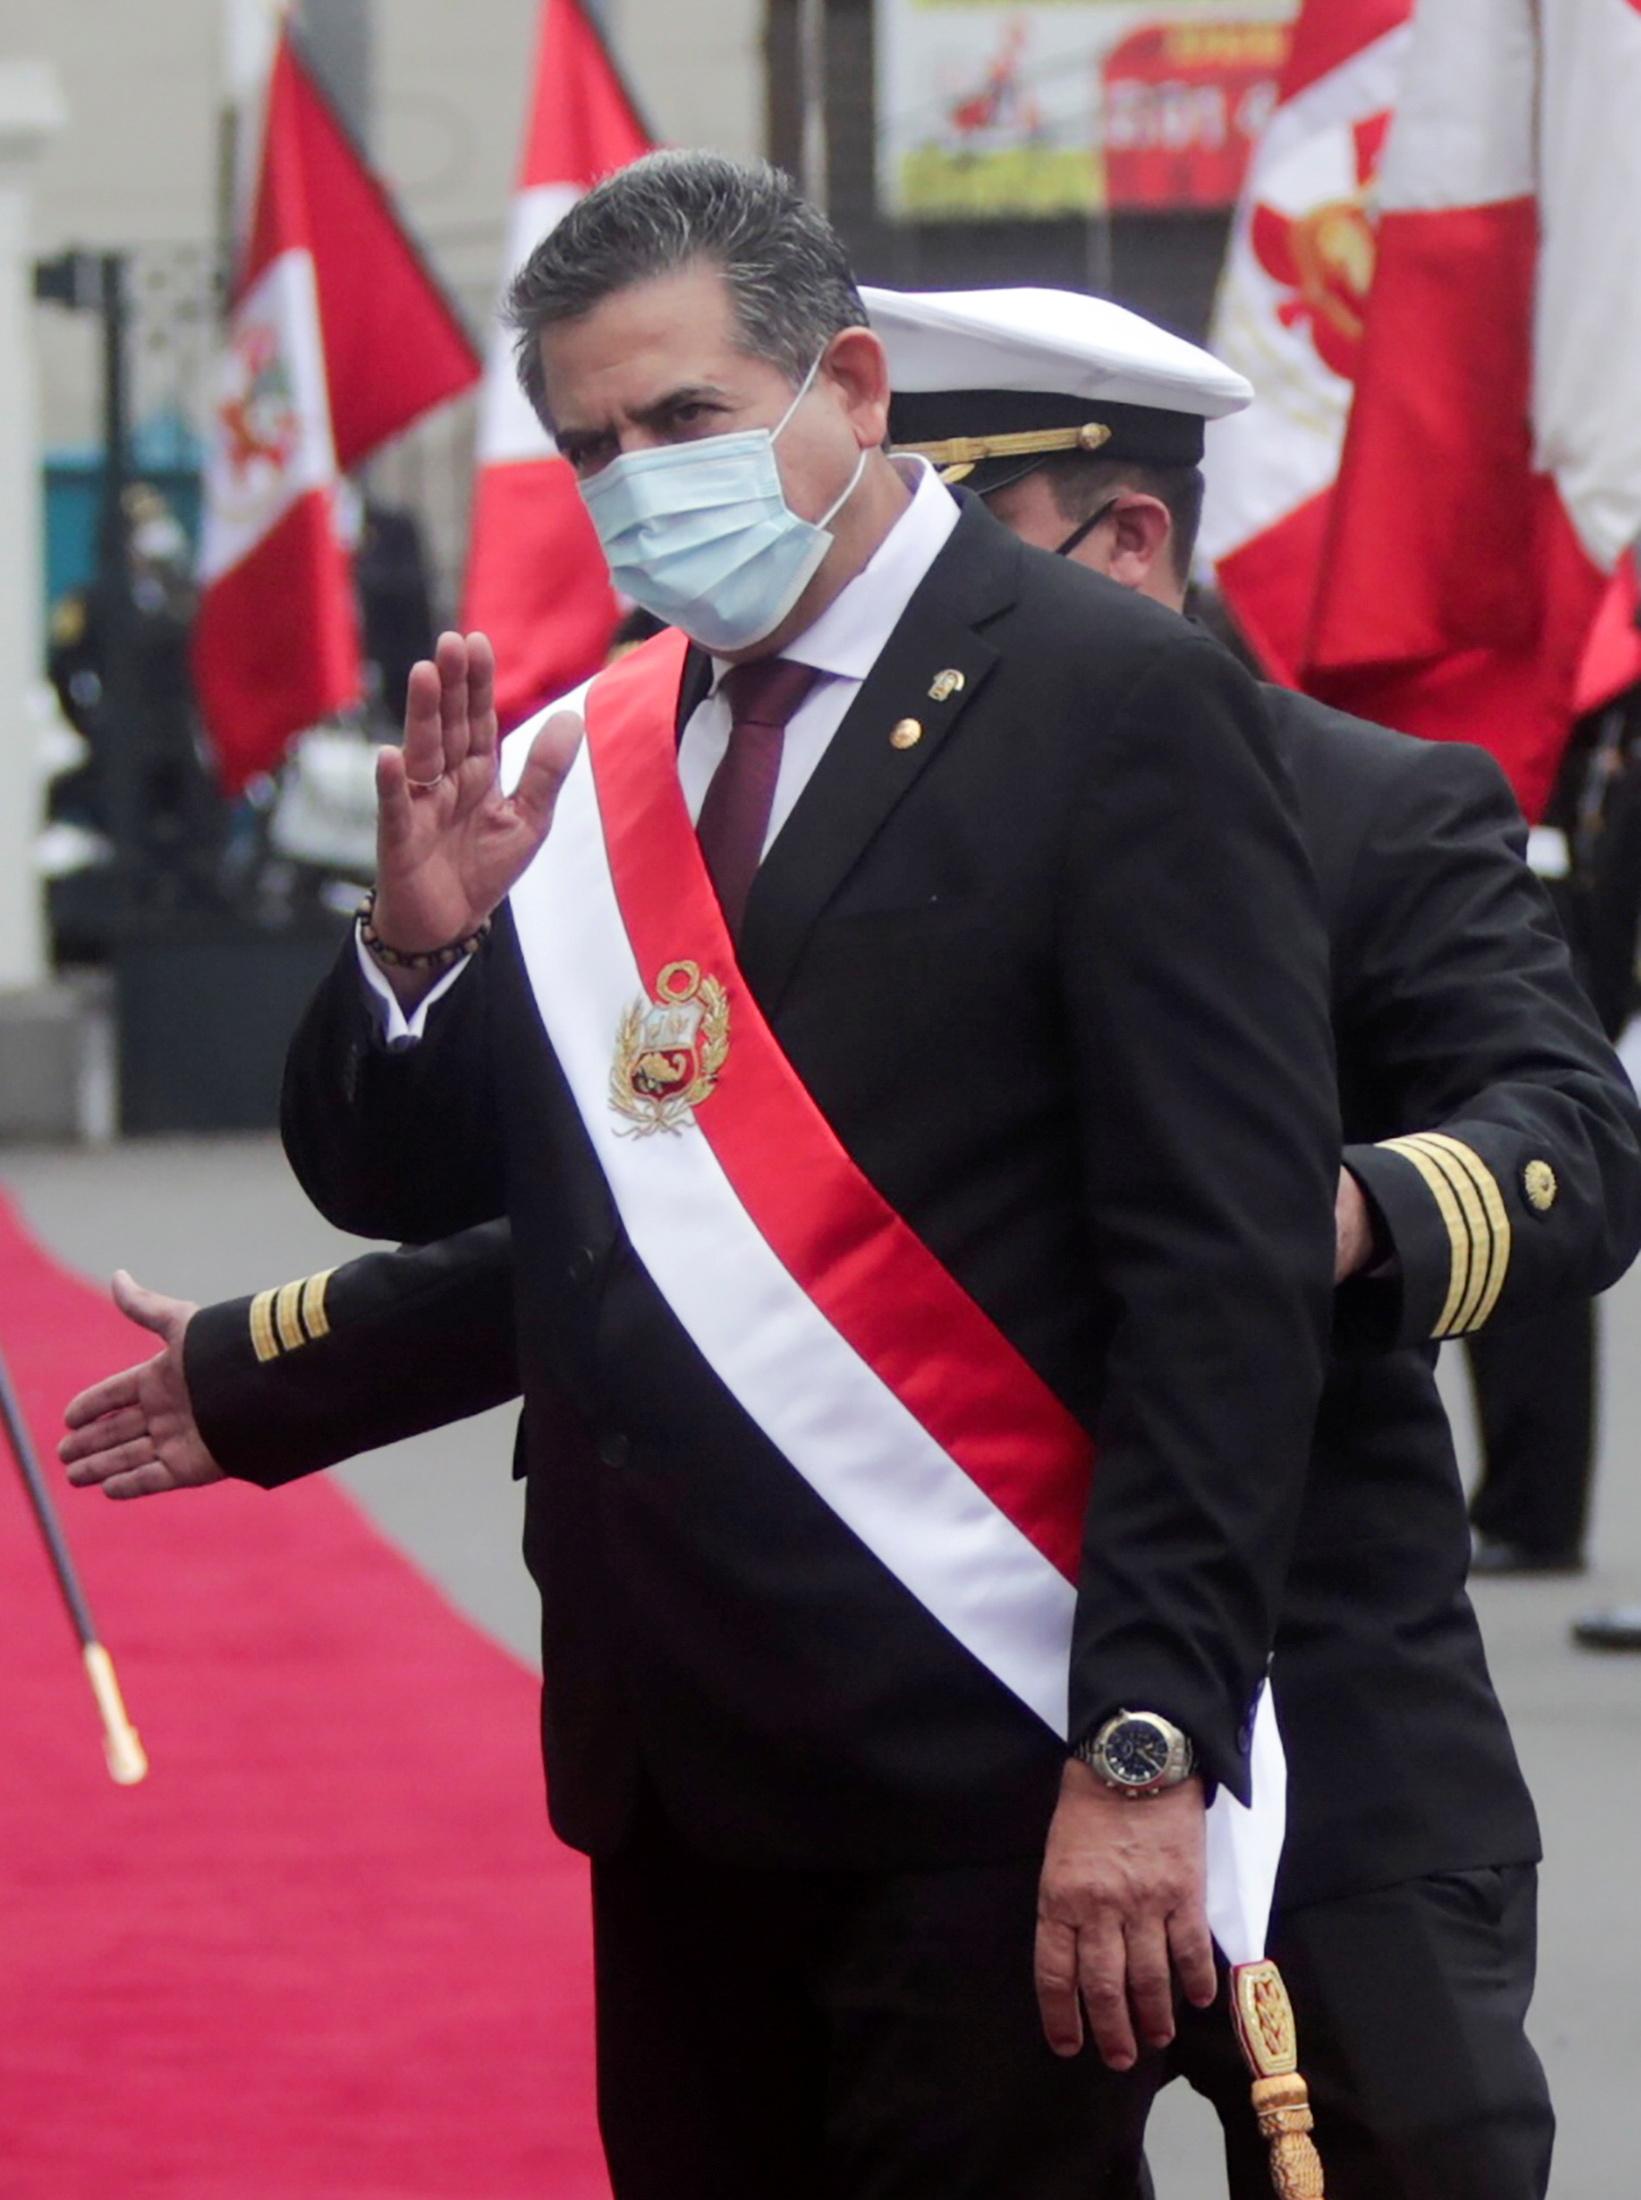 Manuel Merino sworn in as interim president of Peru until July 2021